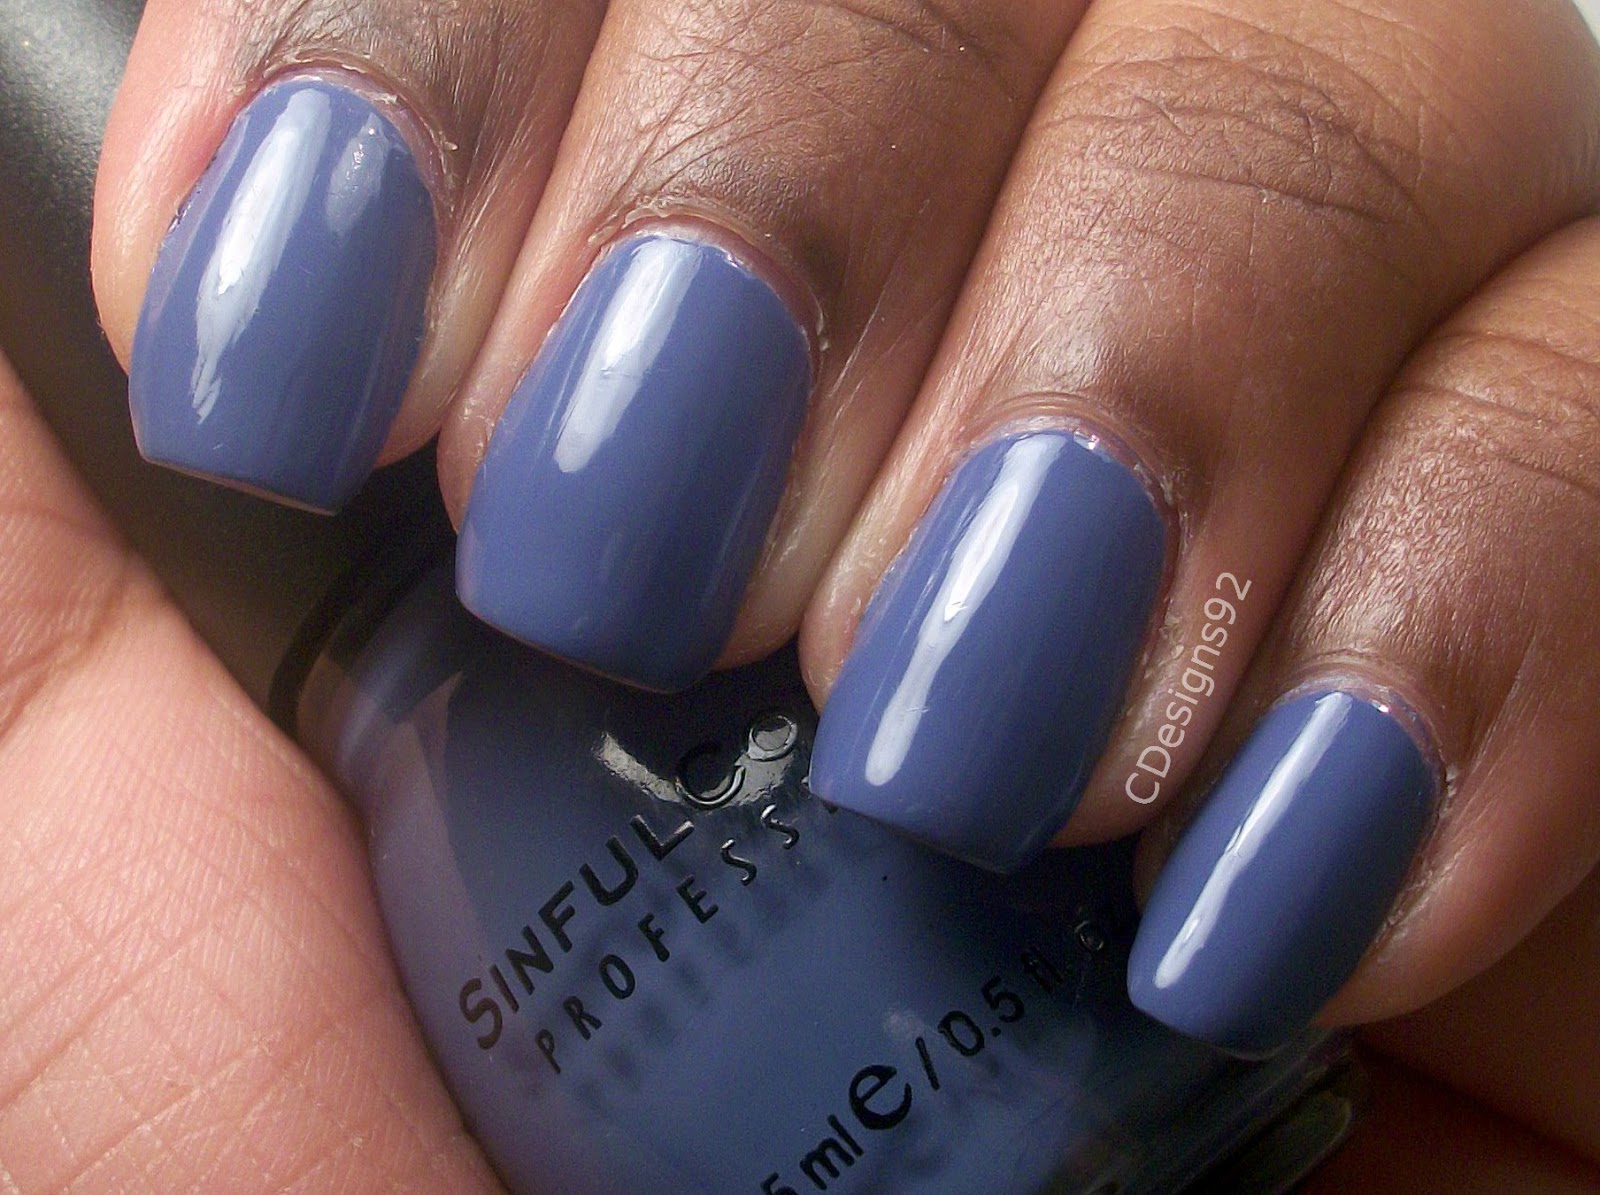 6. "Subtle lavender nail polish for light kintone" - wide 3